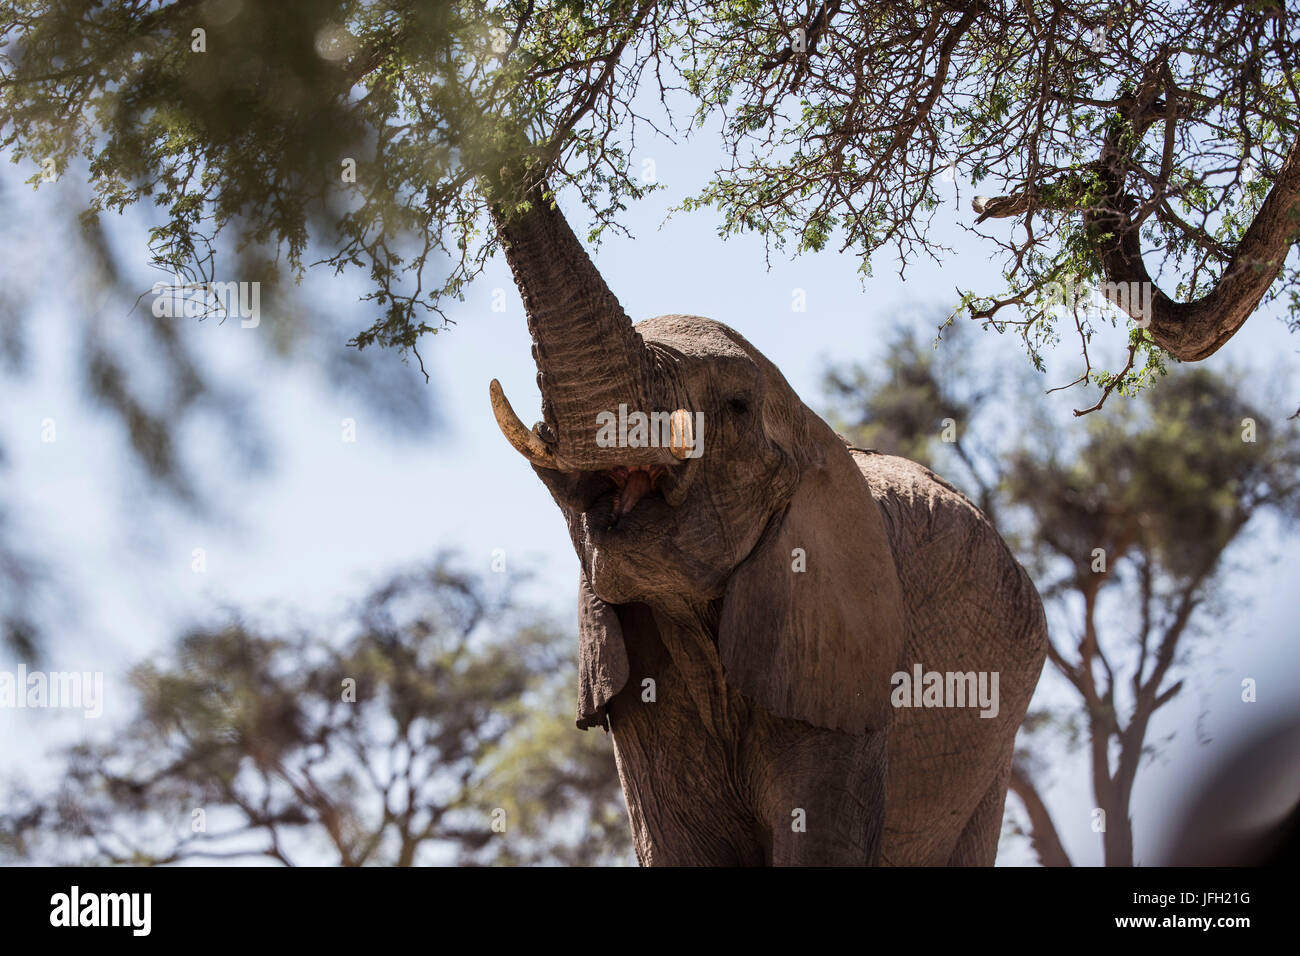 Namibia, Region Kunene, Hoanib, Afrikanischer Elefant Loxodonta Africana, Baum, Gabeln, Blätter, Essen, Stockfoto